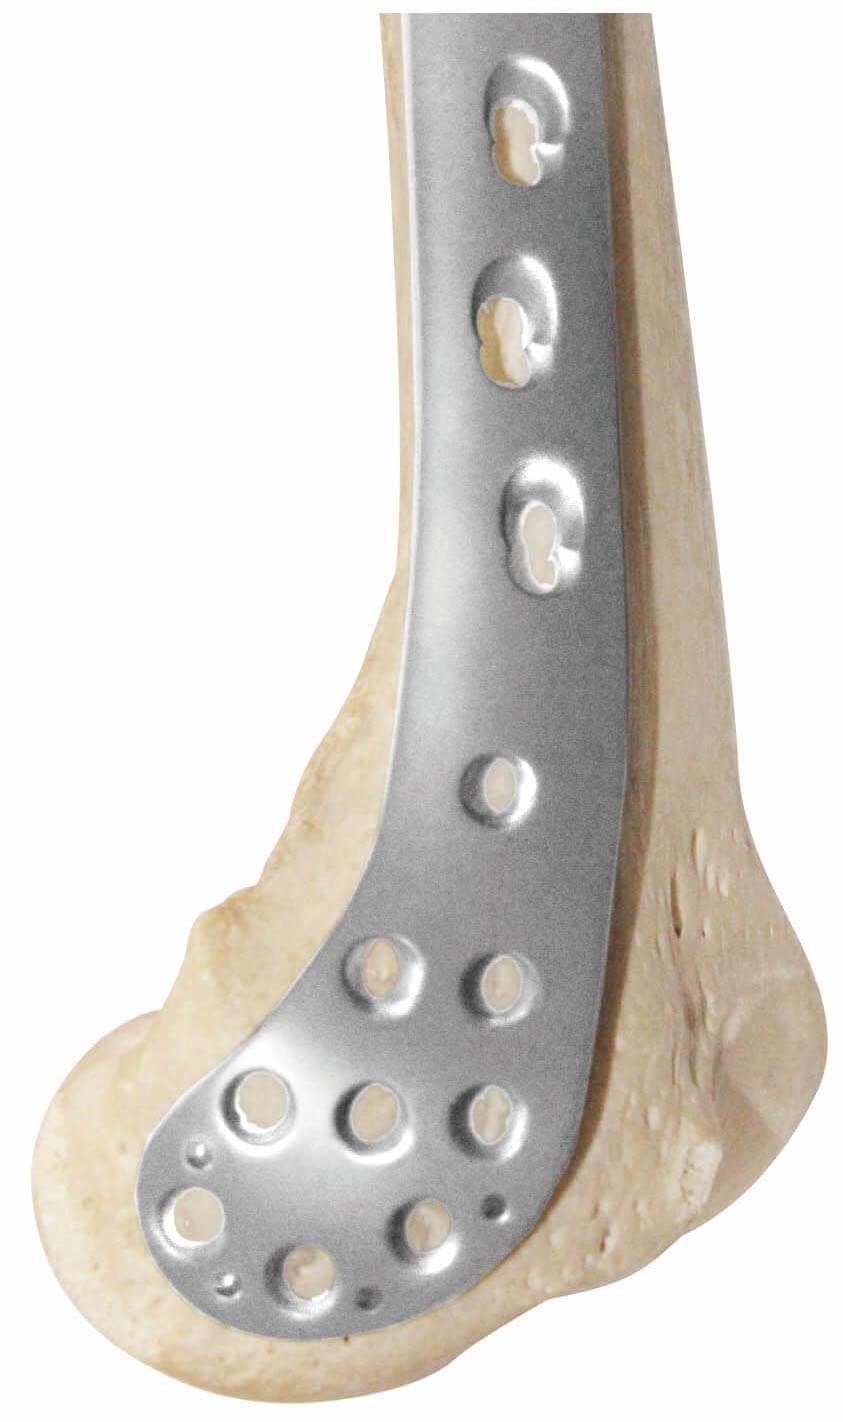 Distal medial femoral locking plate - Placa de bloqueo para fémur distal medial